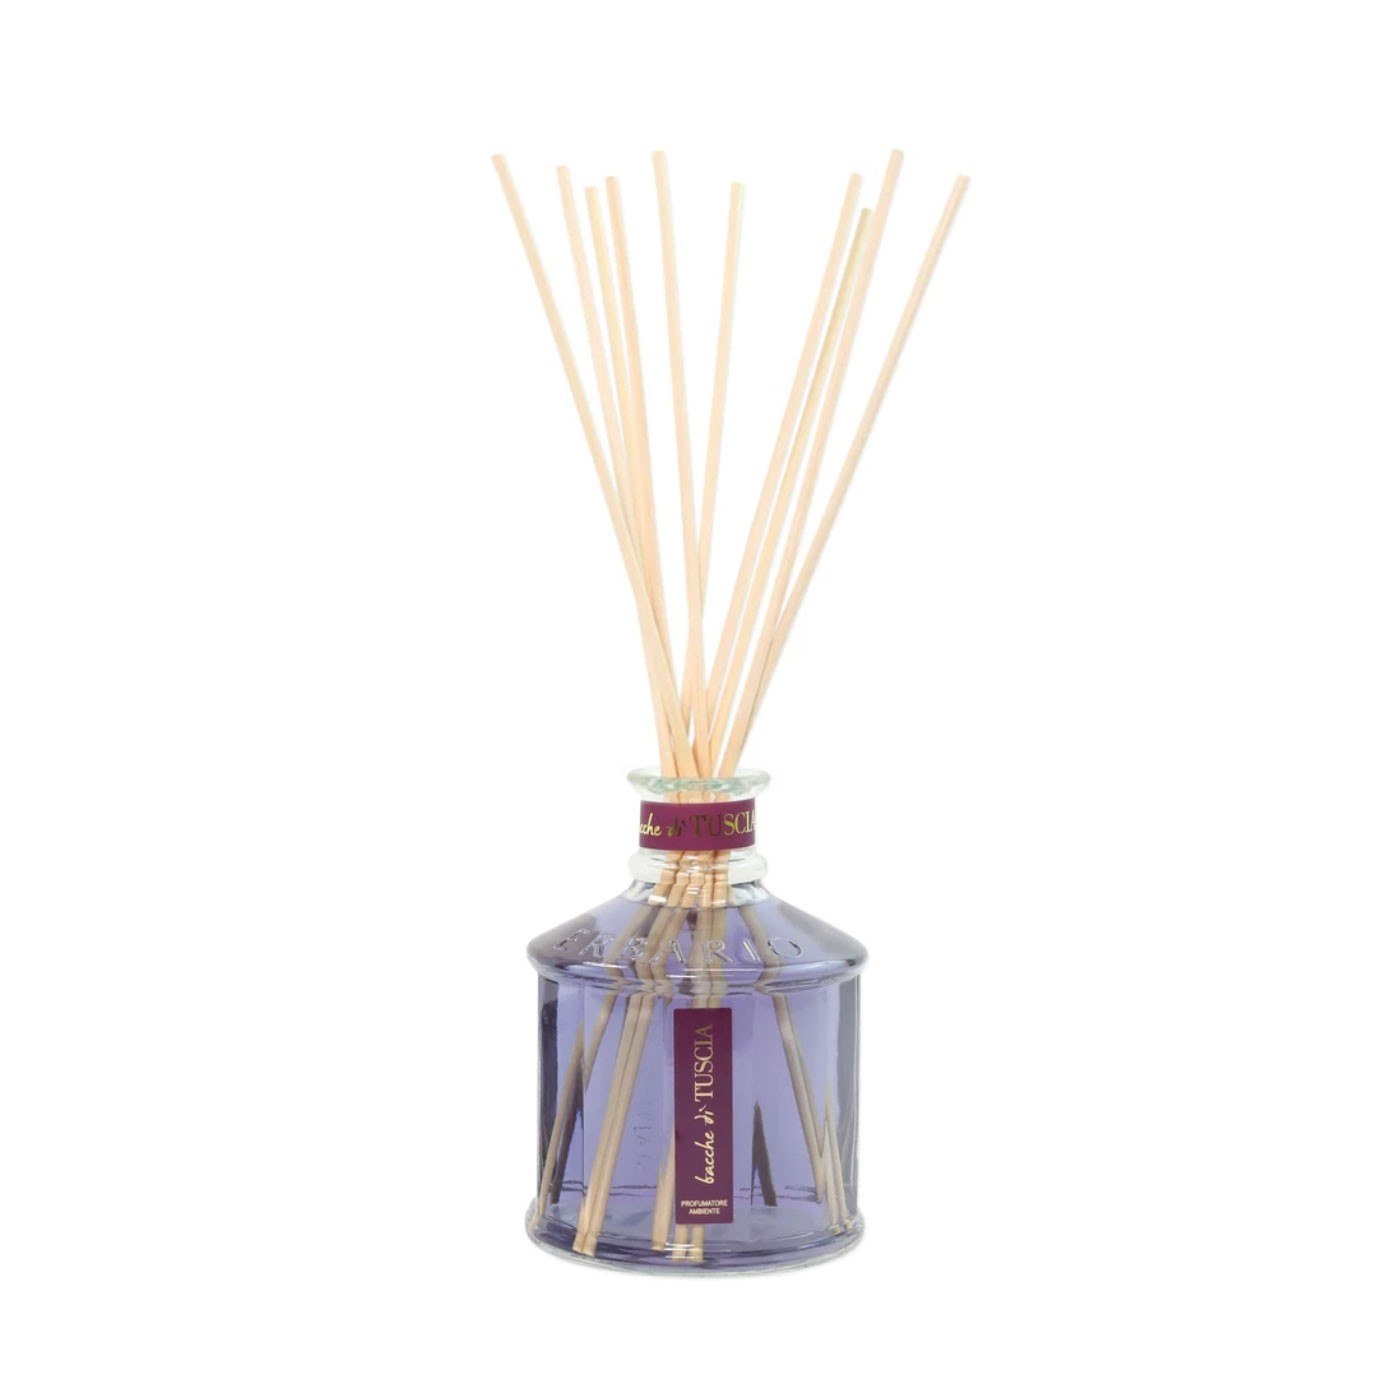 Bacche di Tuscia Fragrance Diffuser 8.4 oz - Erbario Toscano | Eataly.com